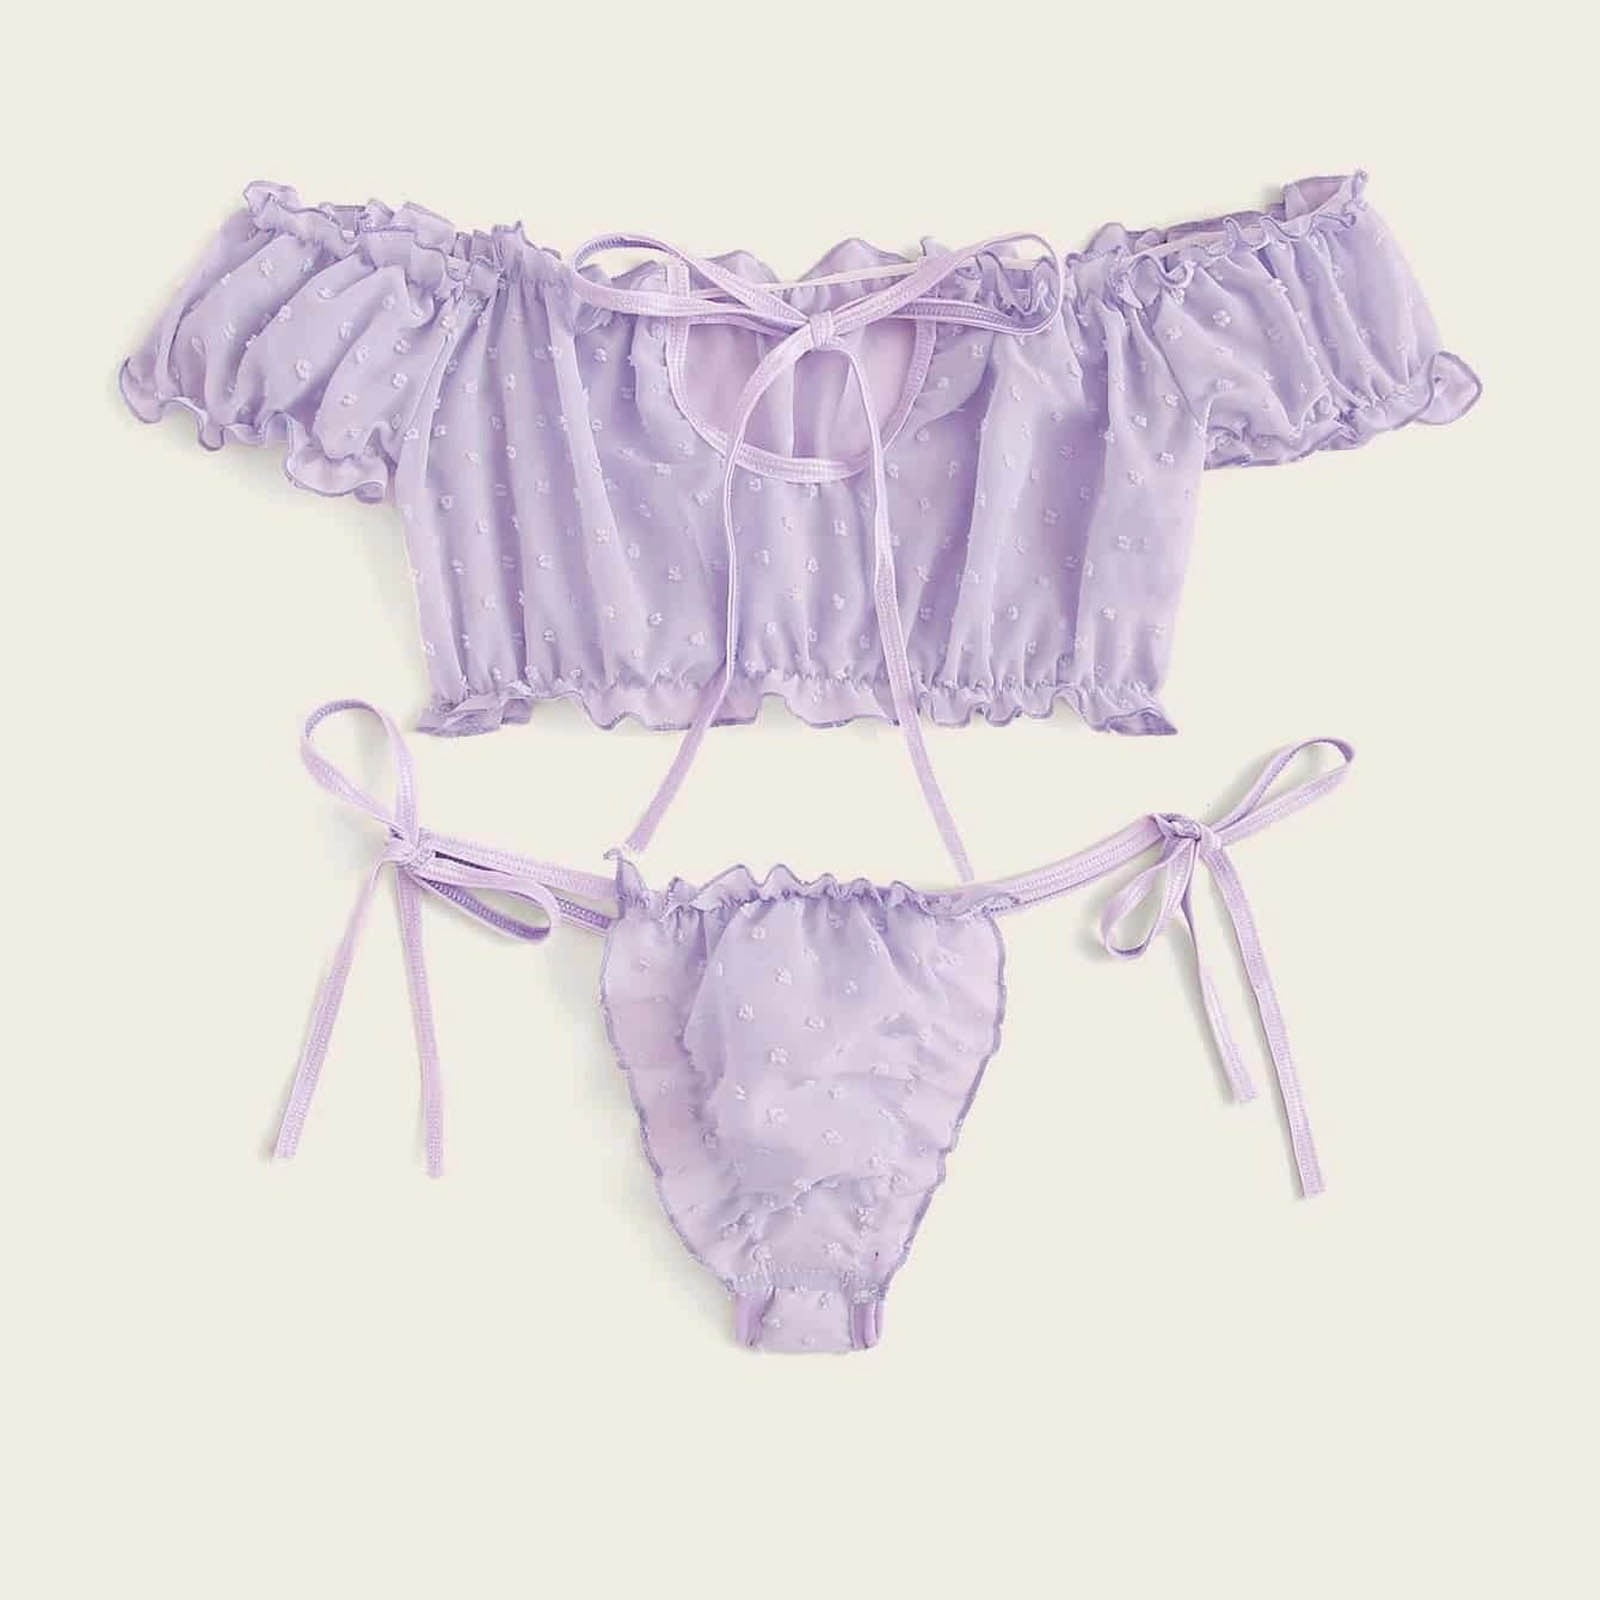 adviicd Mean Underwear Women Embroidery Lace Bra Lingerie With Garter Thong  Set Underwear 